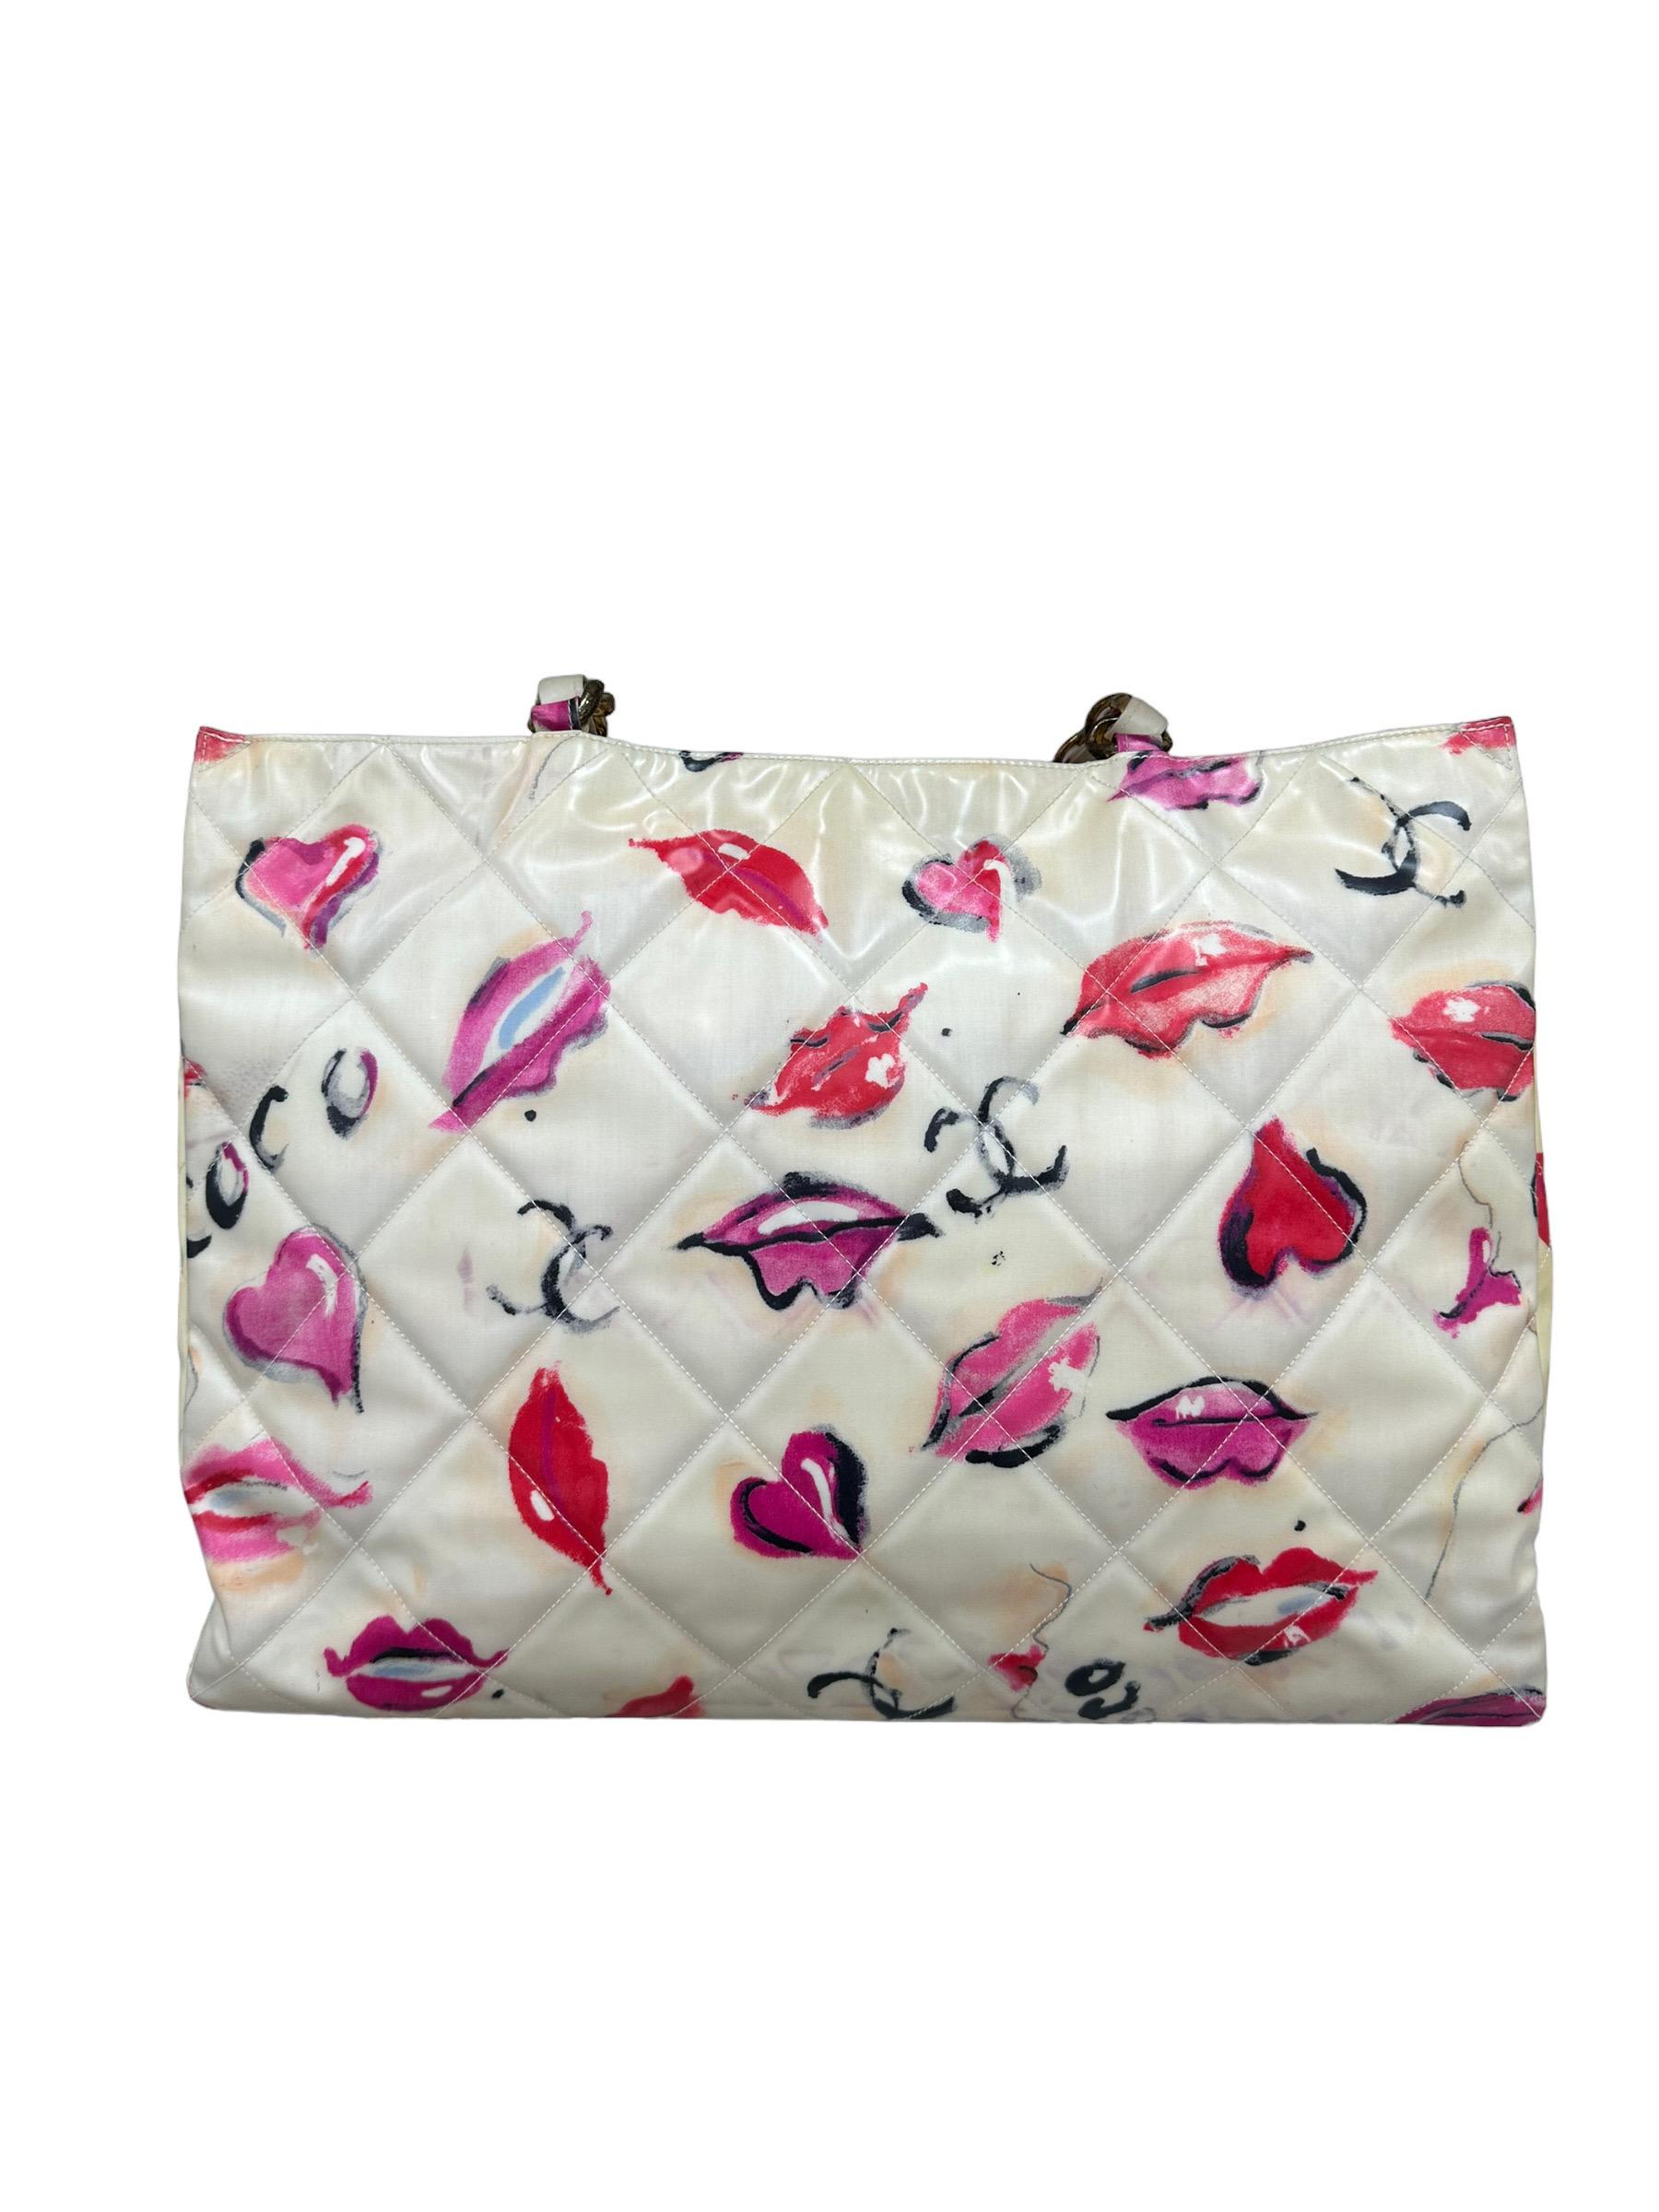 Women's 1994 Chanel Kisses & Lips Limited Edition Shoulder Bag For Sale